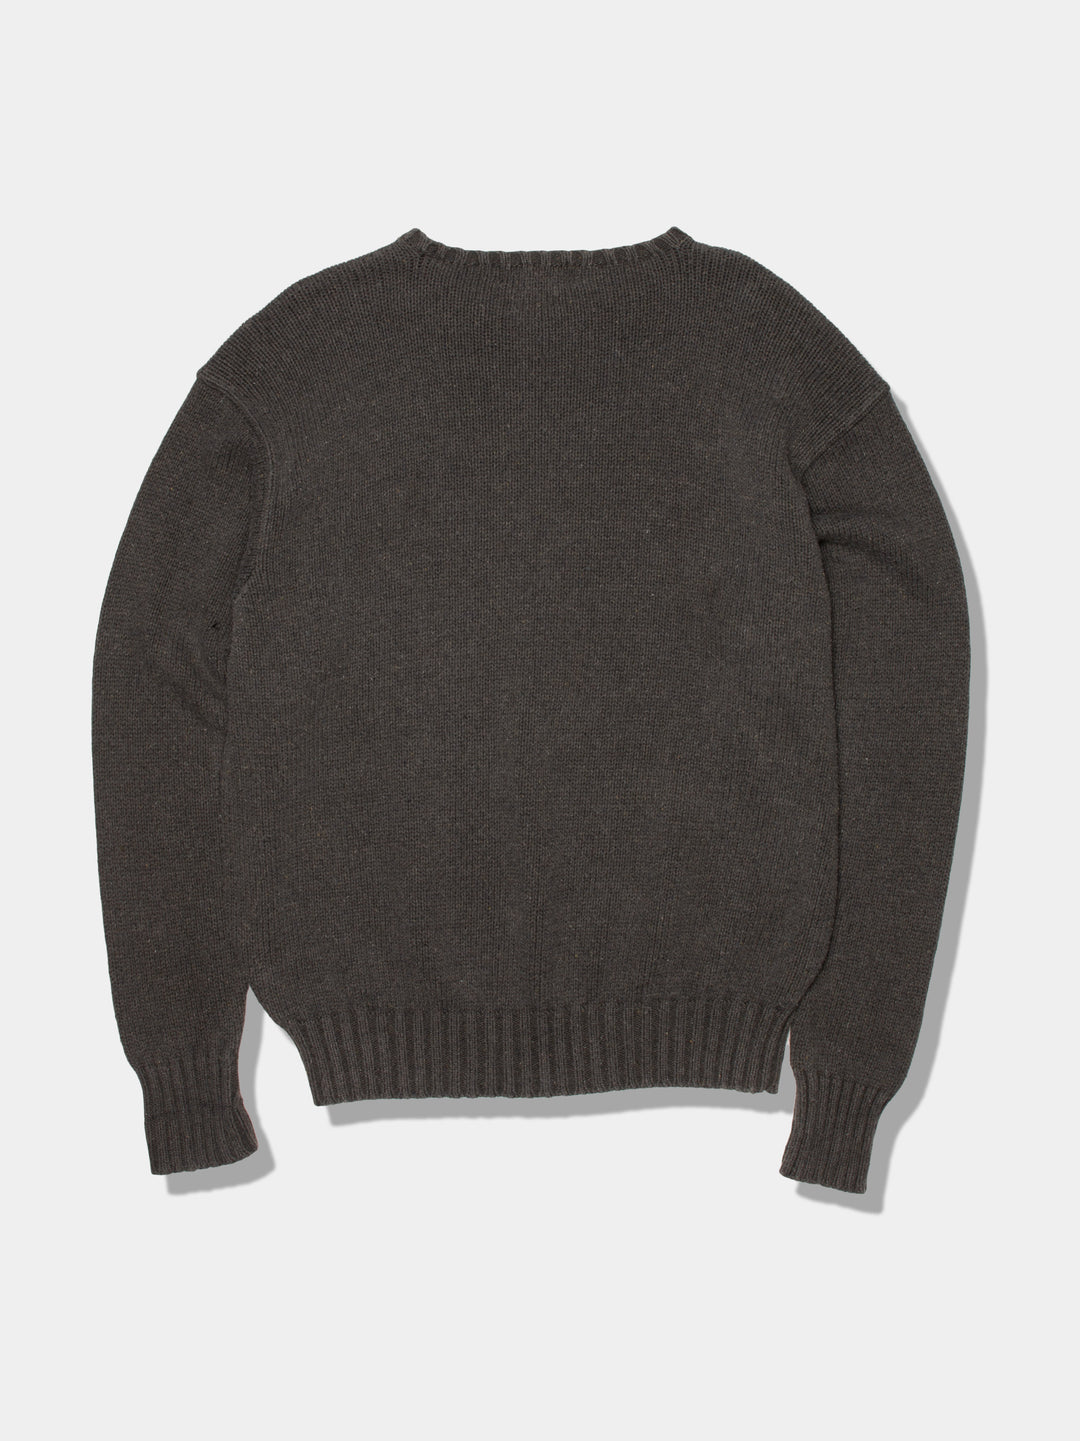 90s Ralph Lauren Sweater (XXL)